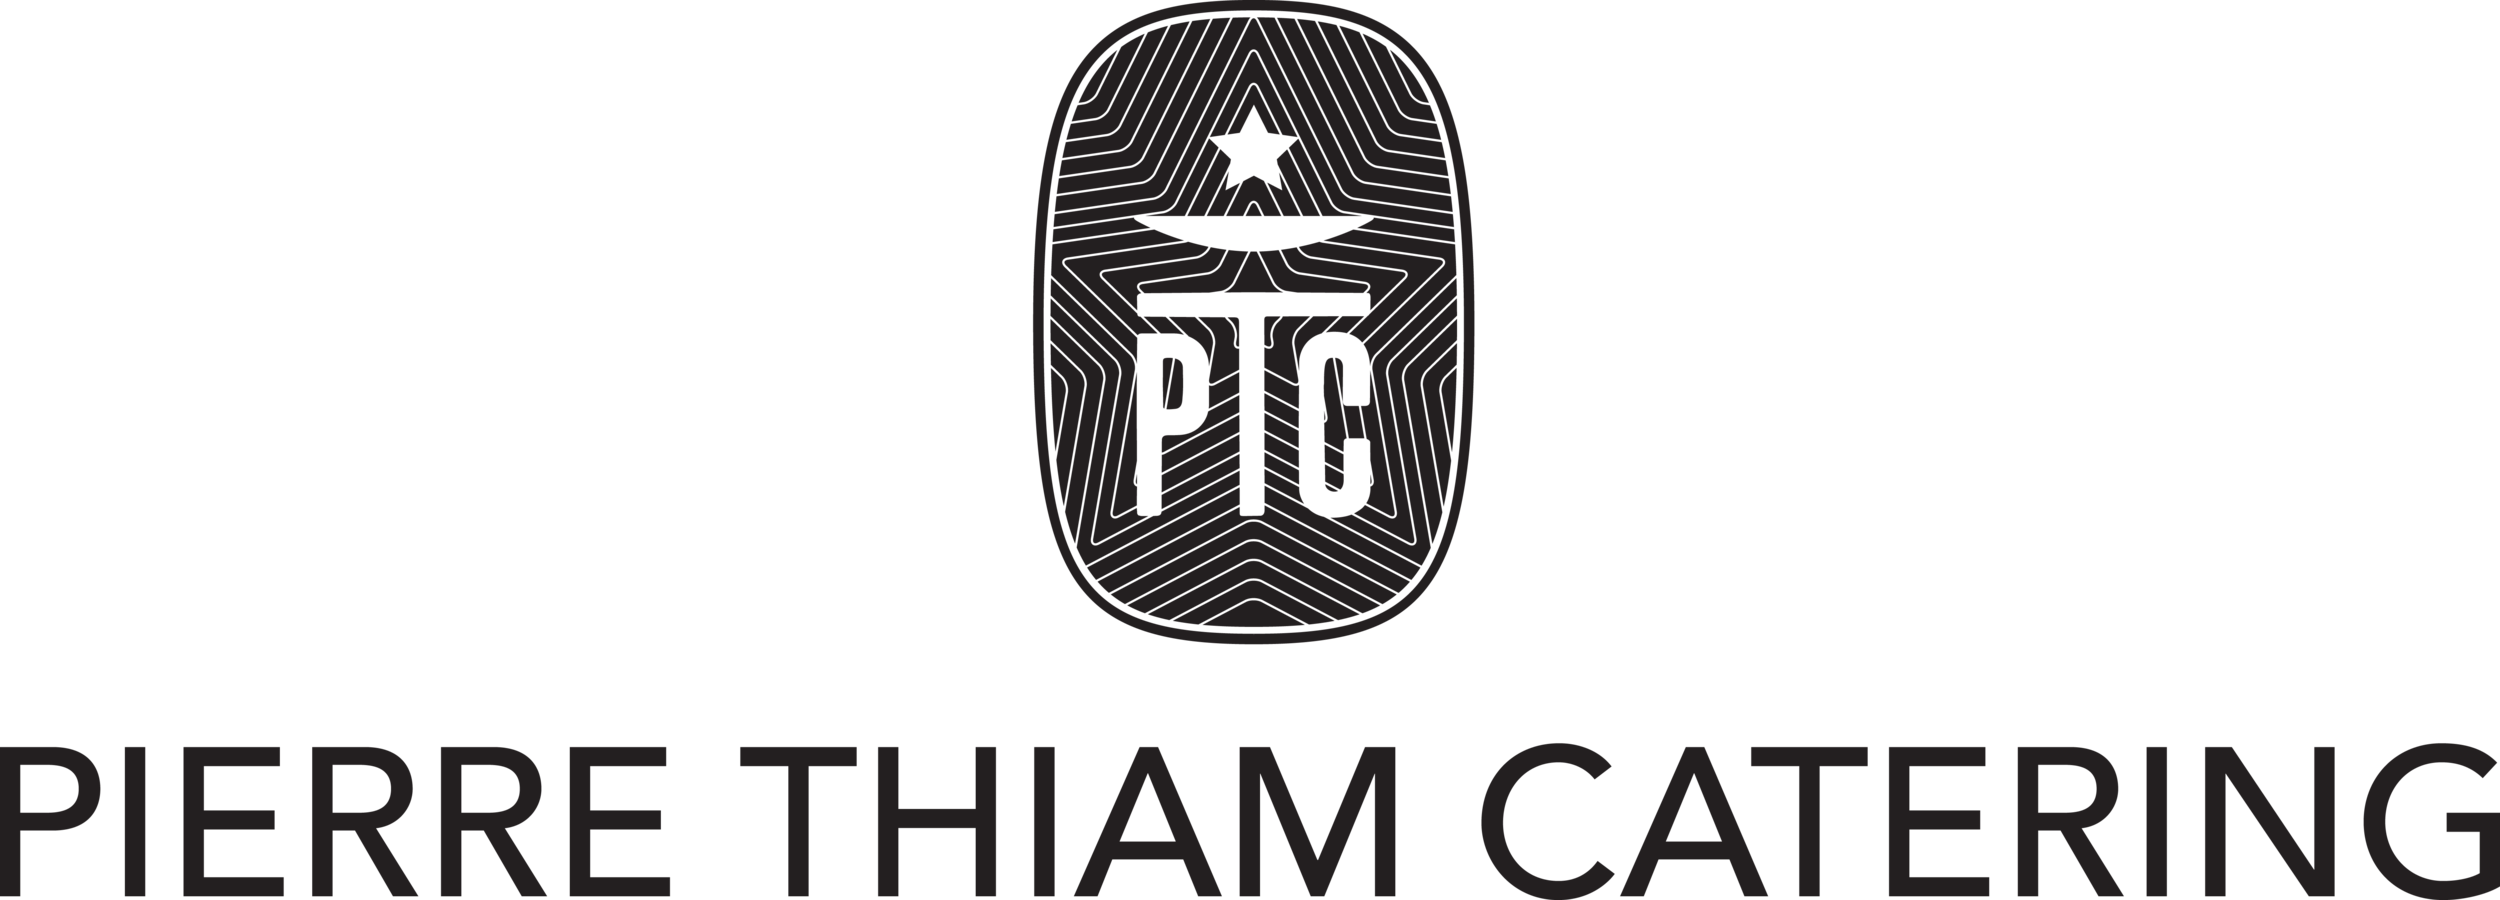 Pierre Thiam Logo.png